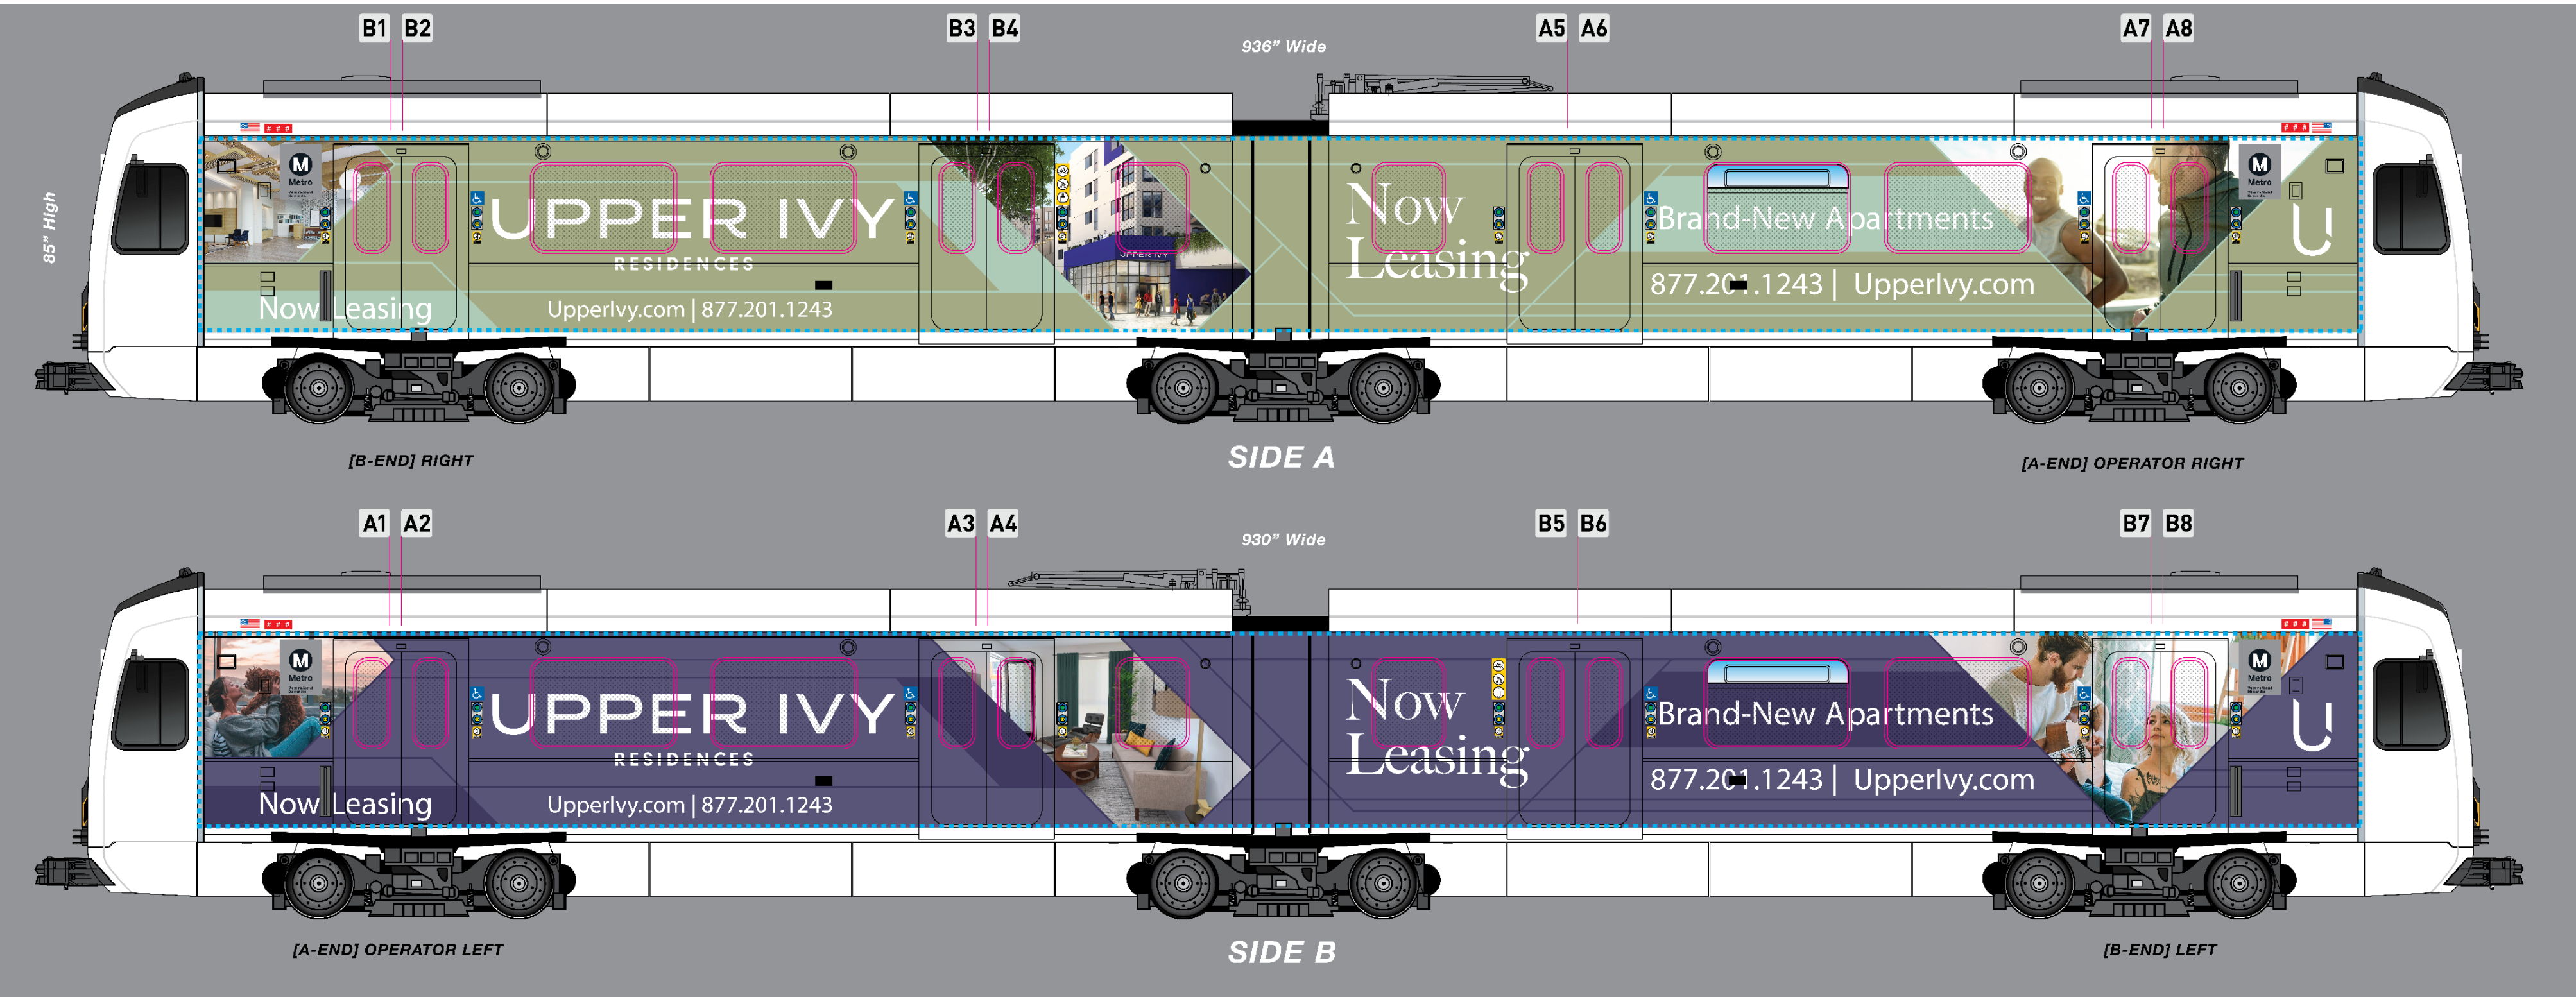 Upper Ivy-Branding Metro Wrap